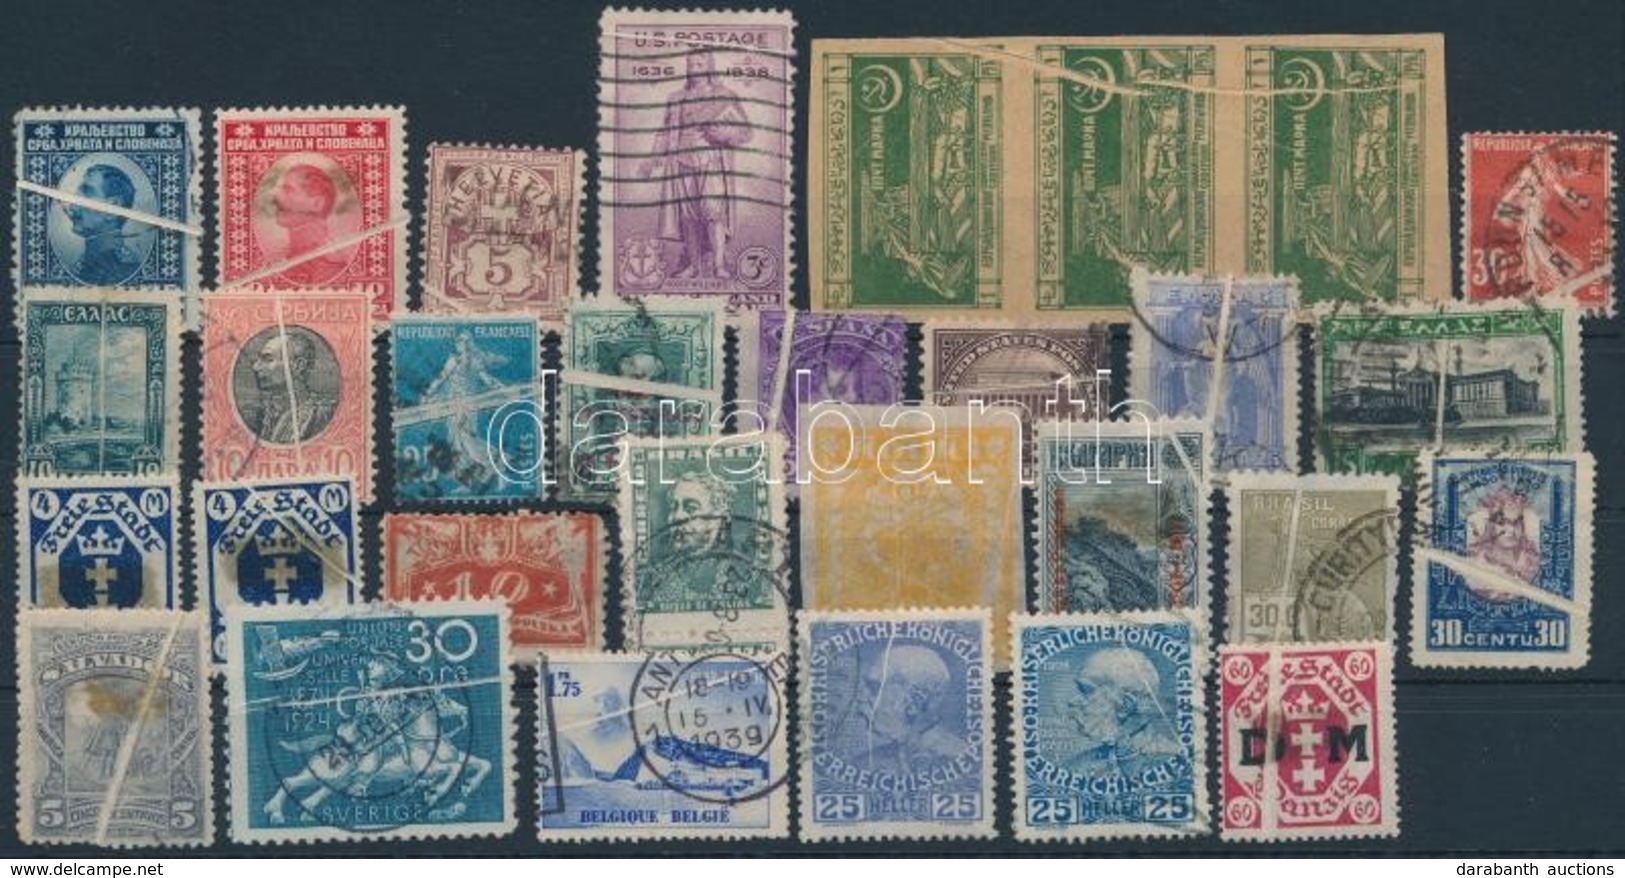 * O 30 Db Papírráncos Bélyeg 19 Különböz? Országból / 30 Stamps With Paper Crease From 19 Different Countries - Other & Unclassified